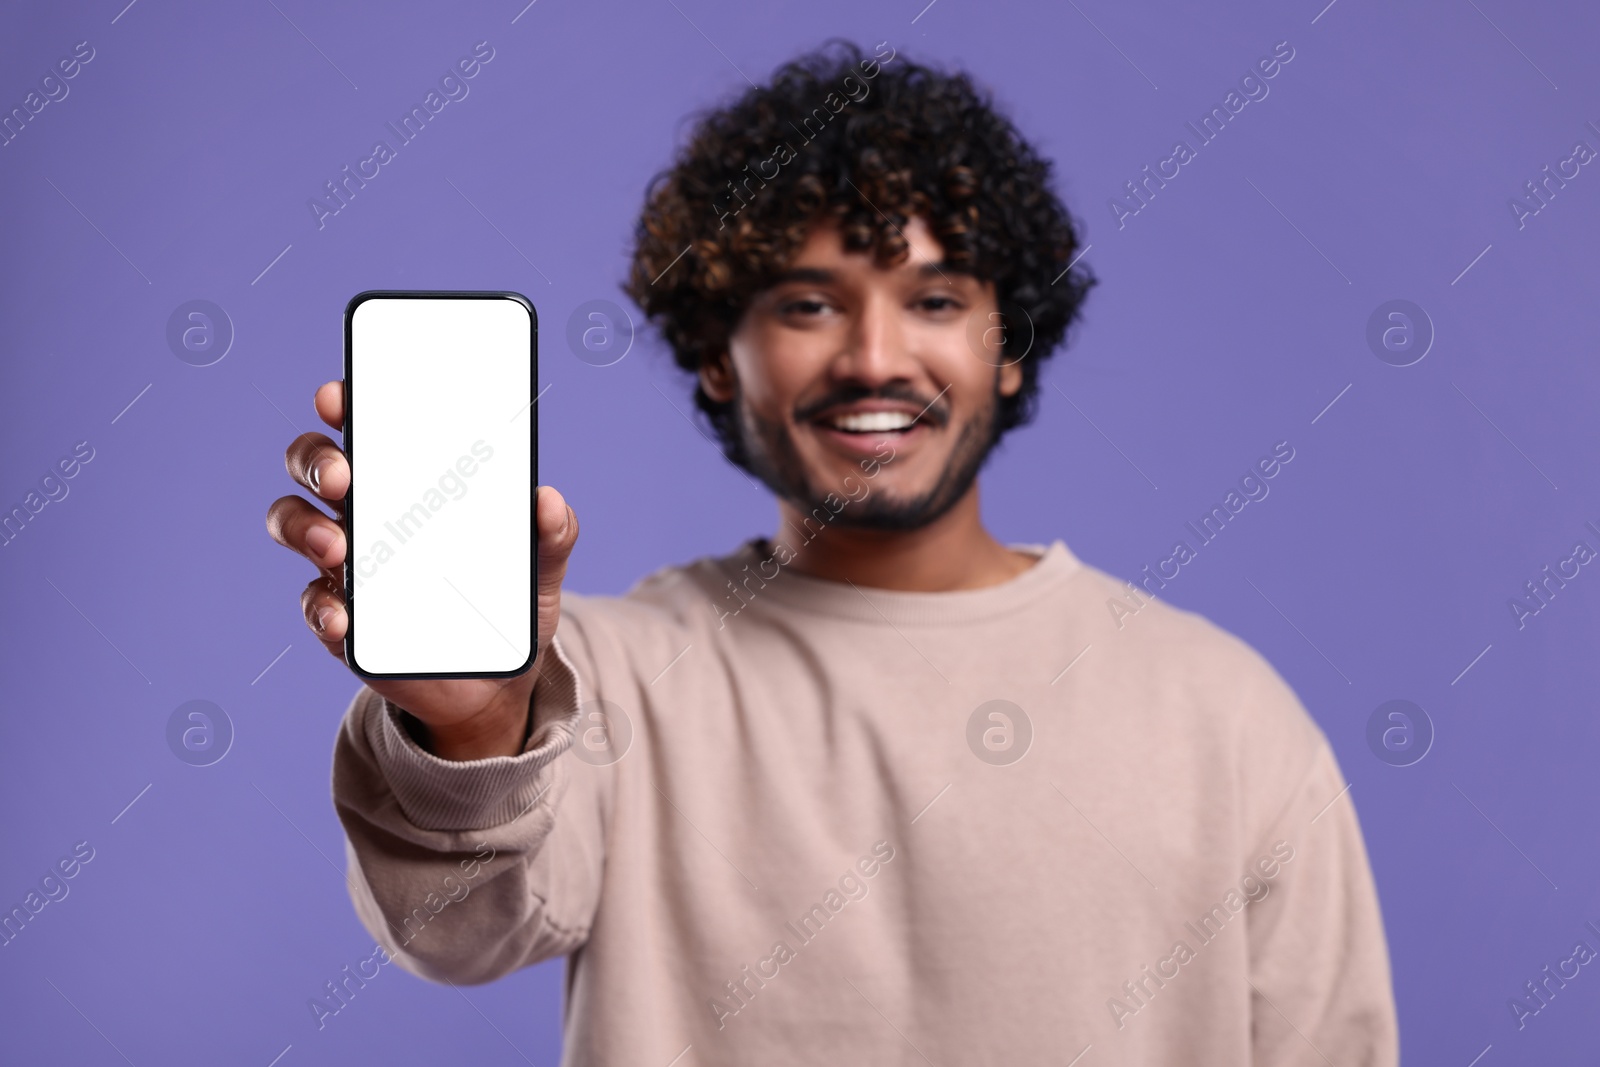 Photo of Handsome smiling man showing smartphone on violet background, selective focus